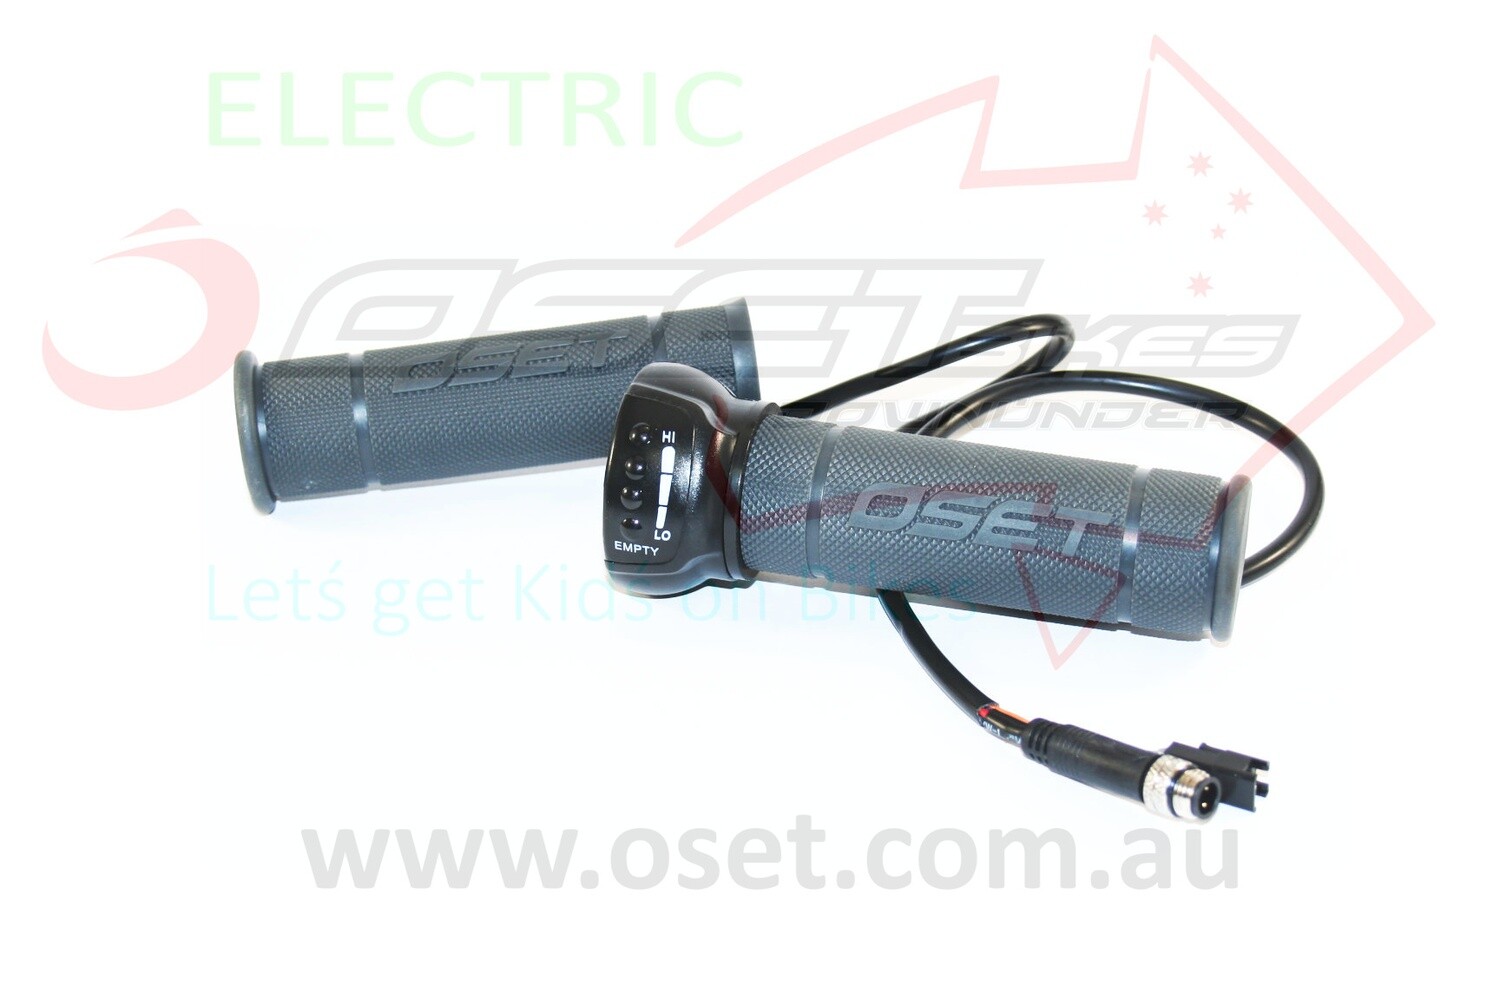 Throttle OSET16E/R 20L - 36v Thin Short Grey Grips